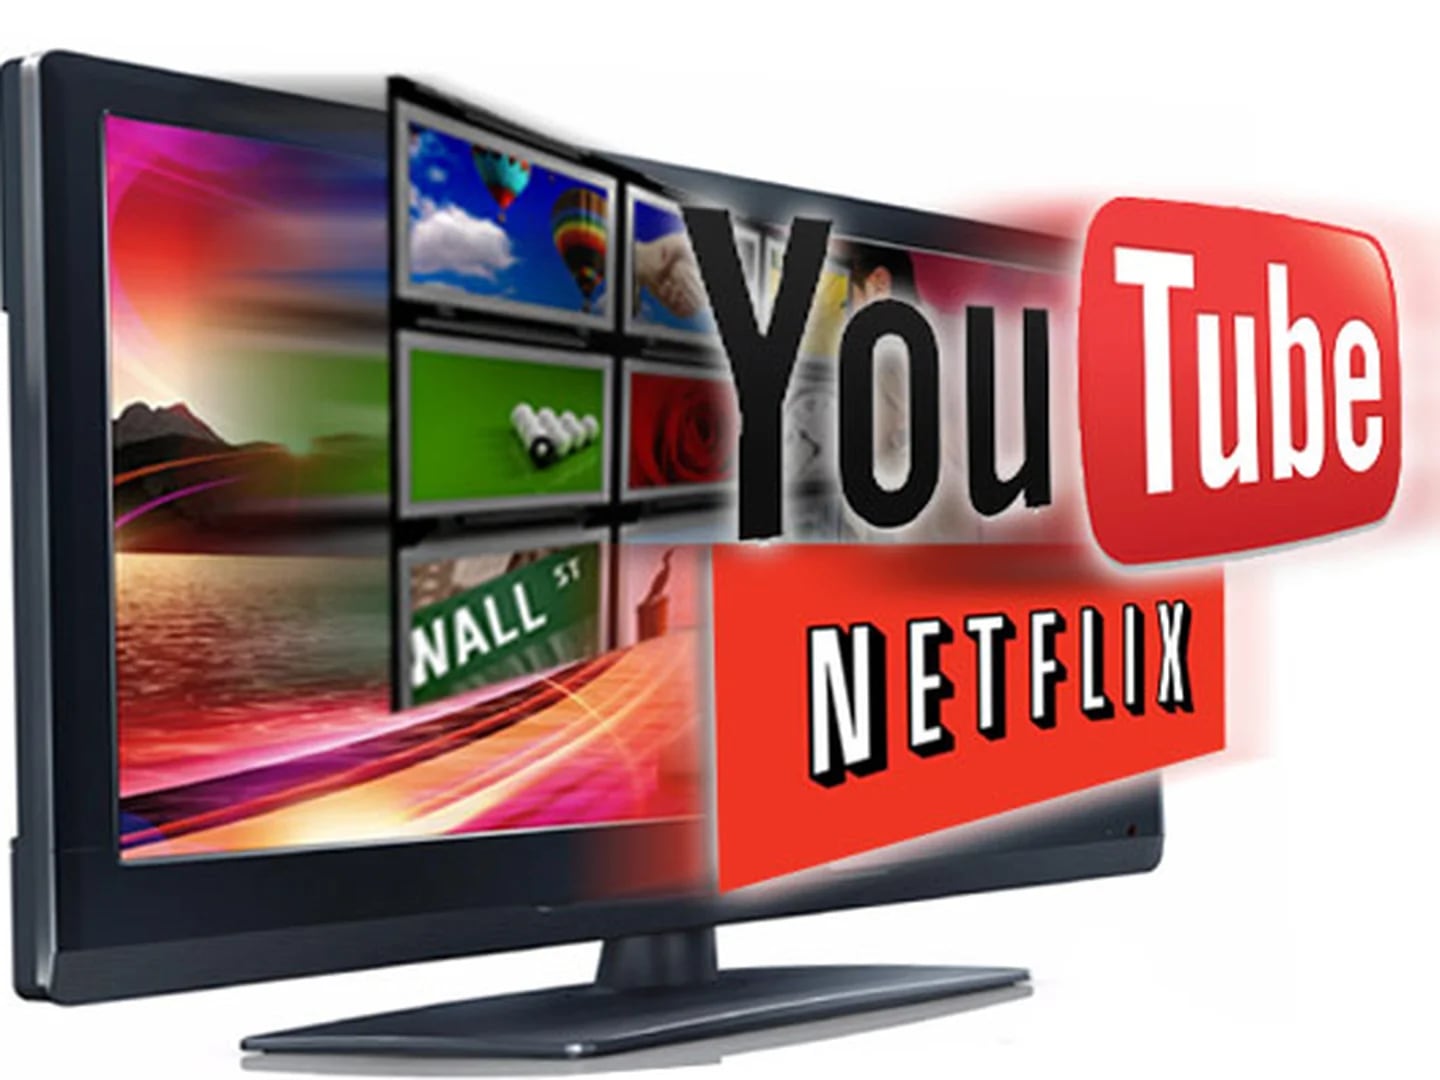 Convertidor Smart tv - Disfruta del Streaming en tu vieja pantalla